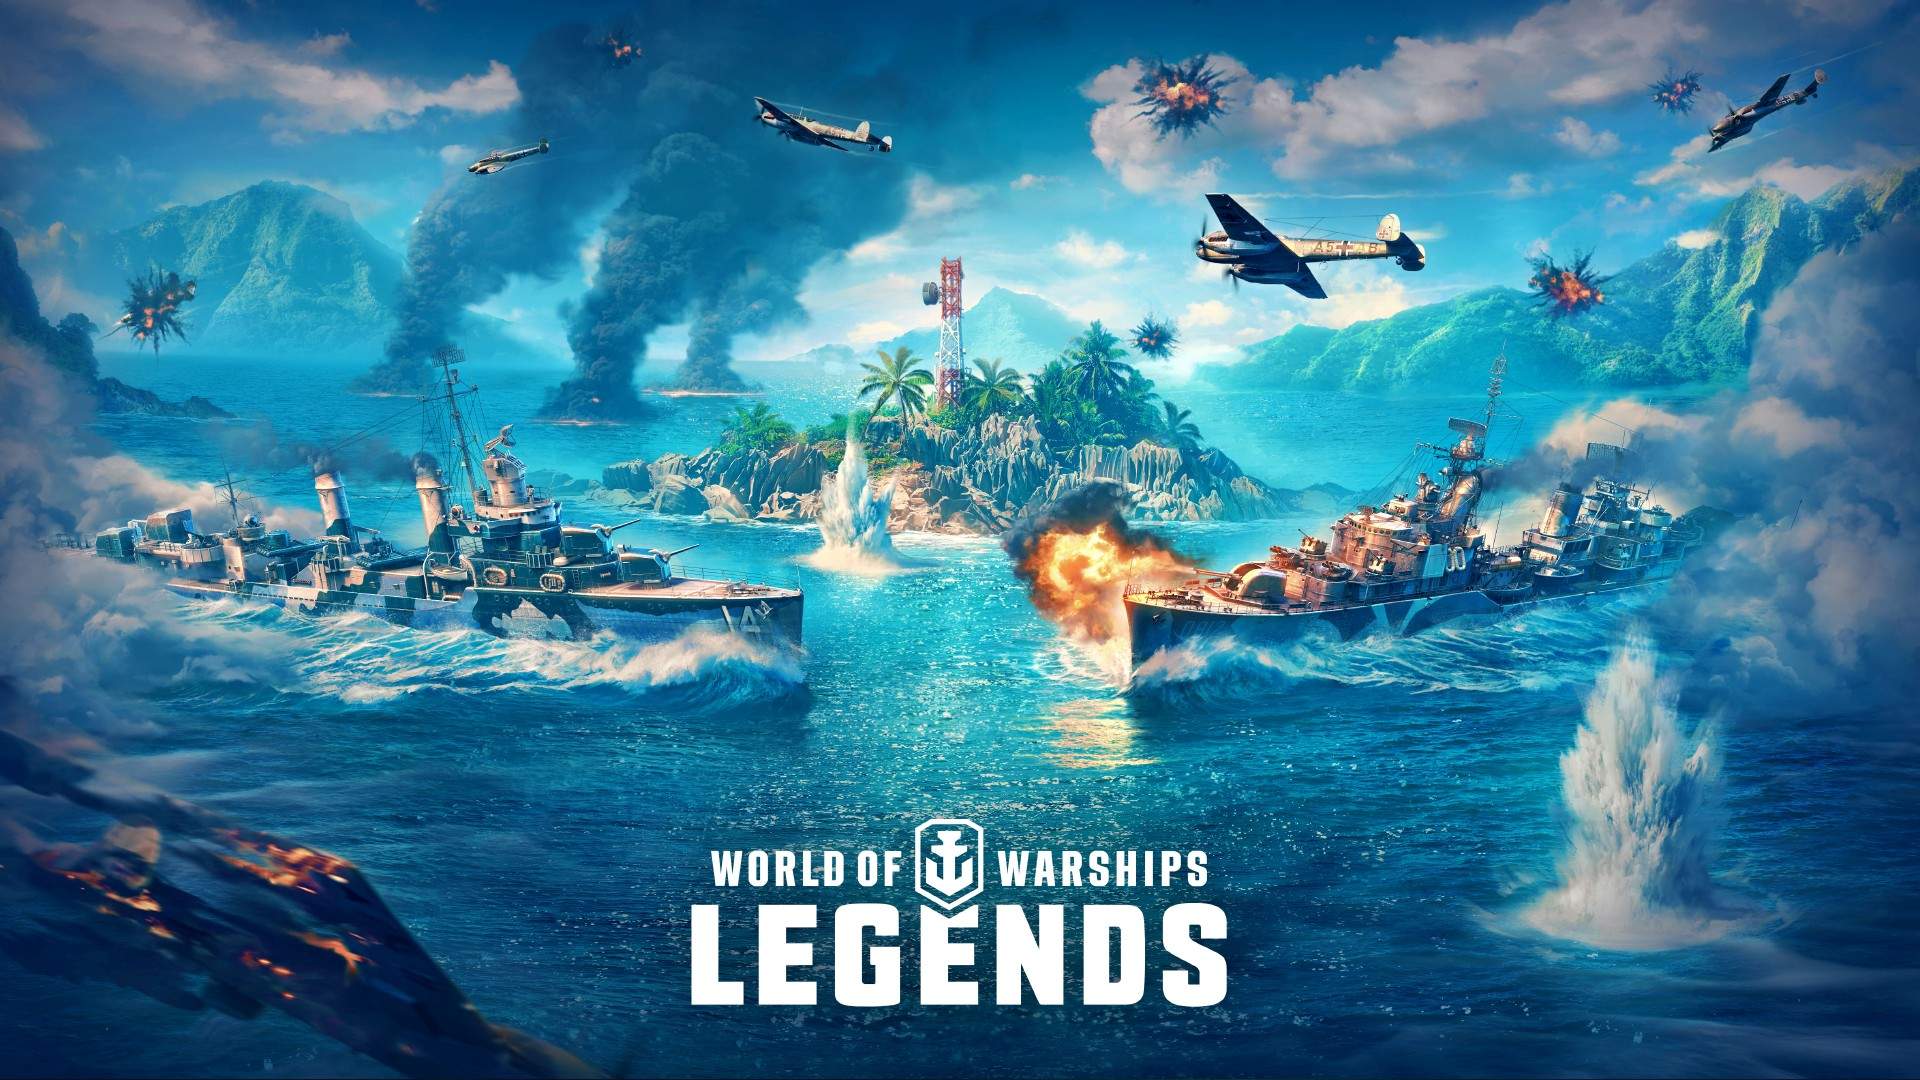 Il videogioco World of Warships: Legends